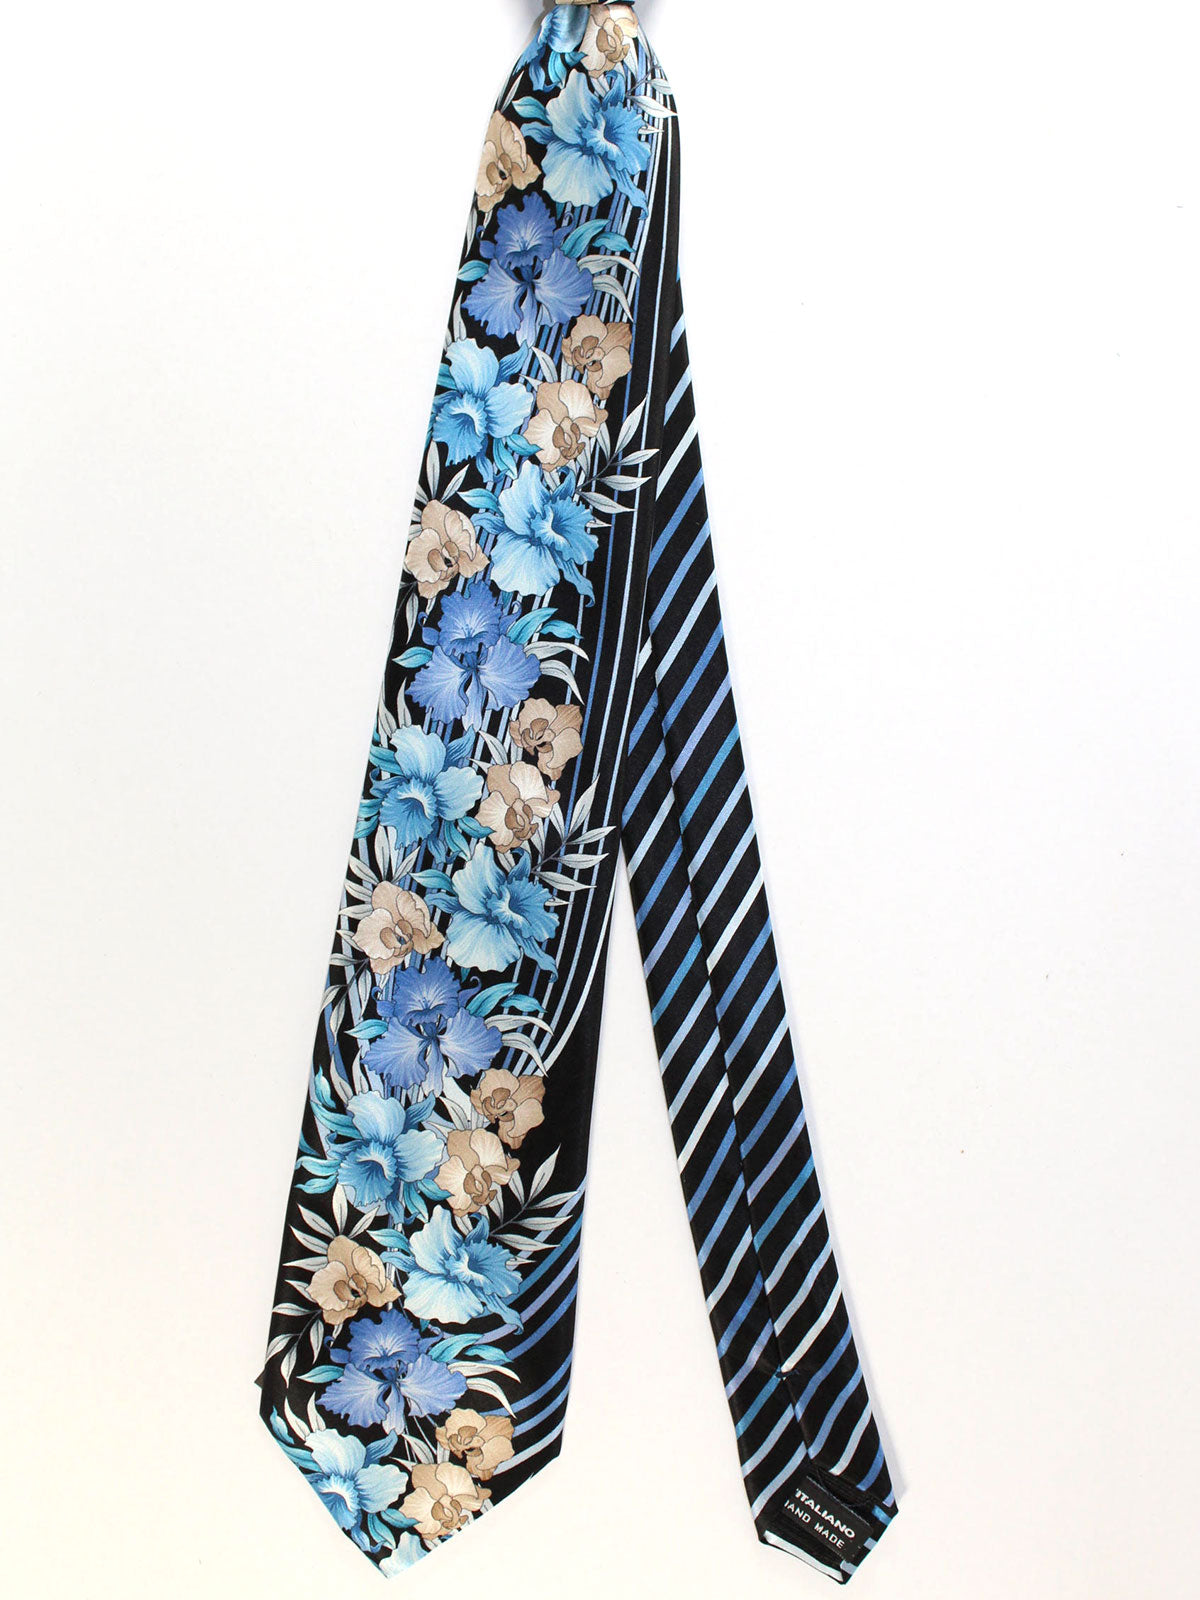 Vitaliano Pancaldi Tie Black Blue Cream Floral Design